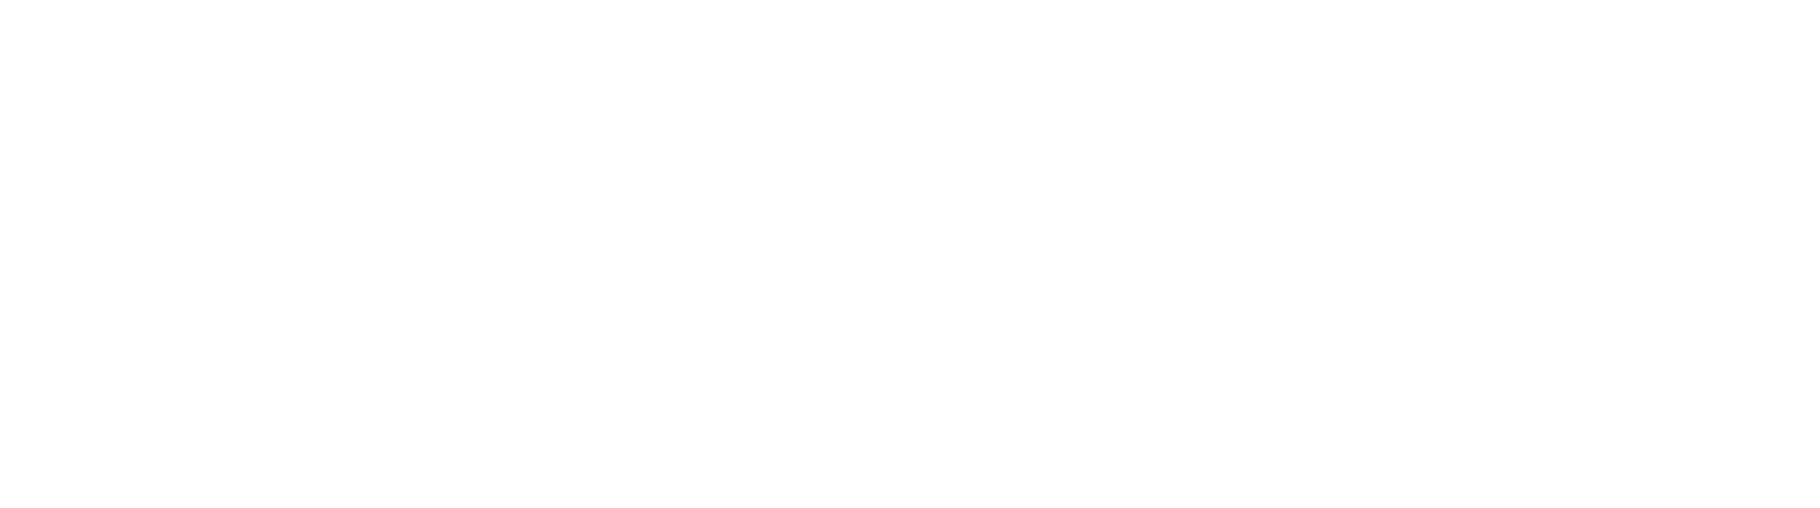 Slimtum - WIN a @slimtum PRO waist trainer with Reirei! Details